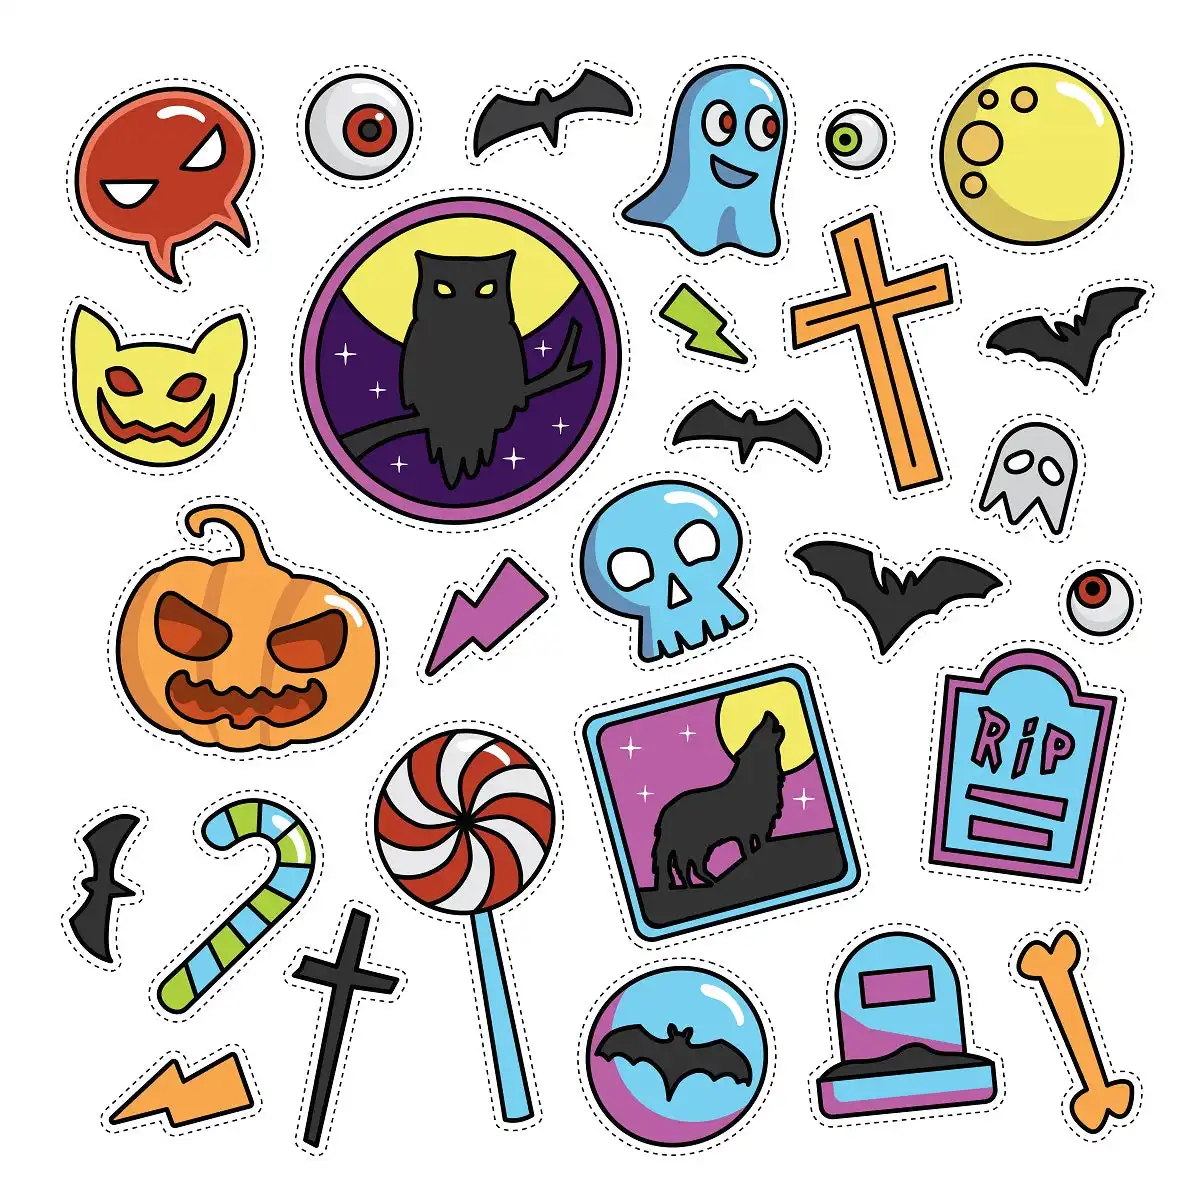 Cute Halloween Stickers